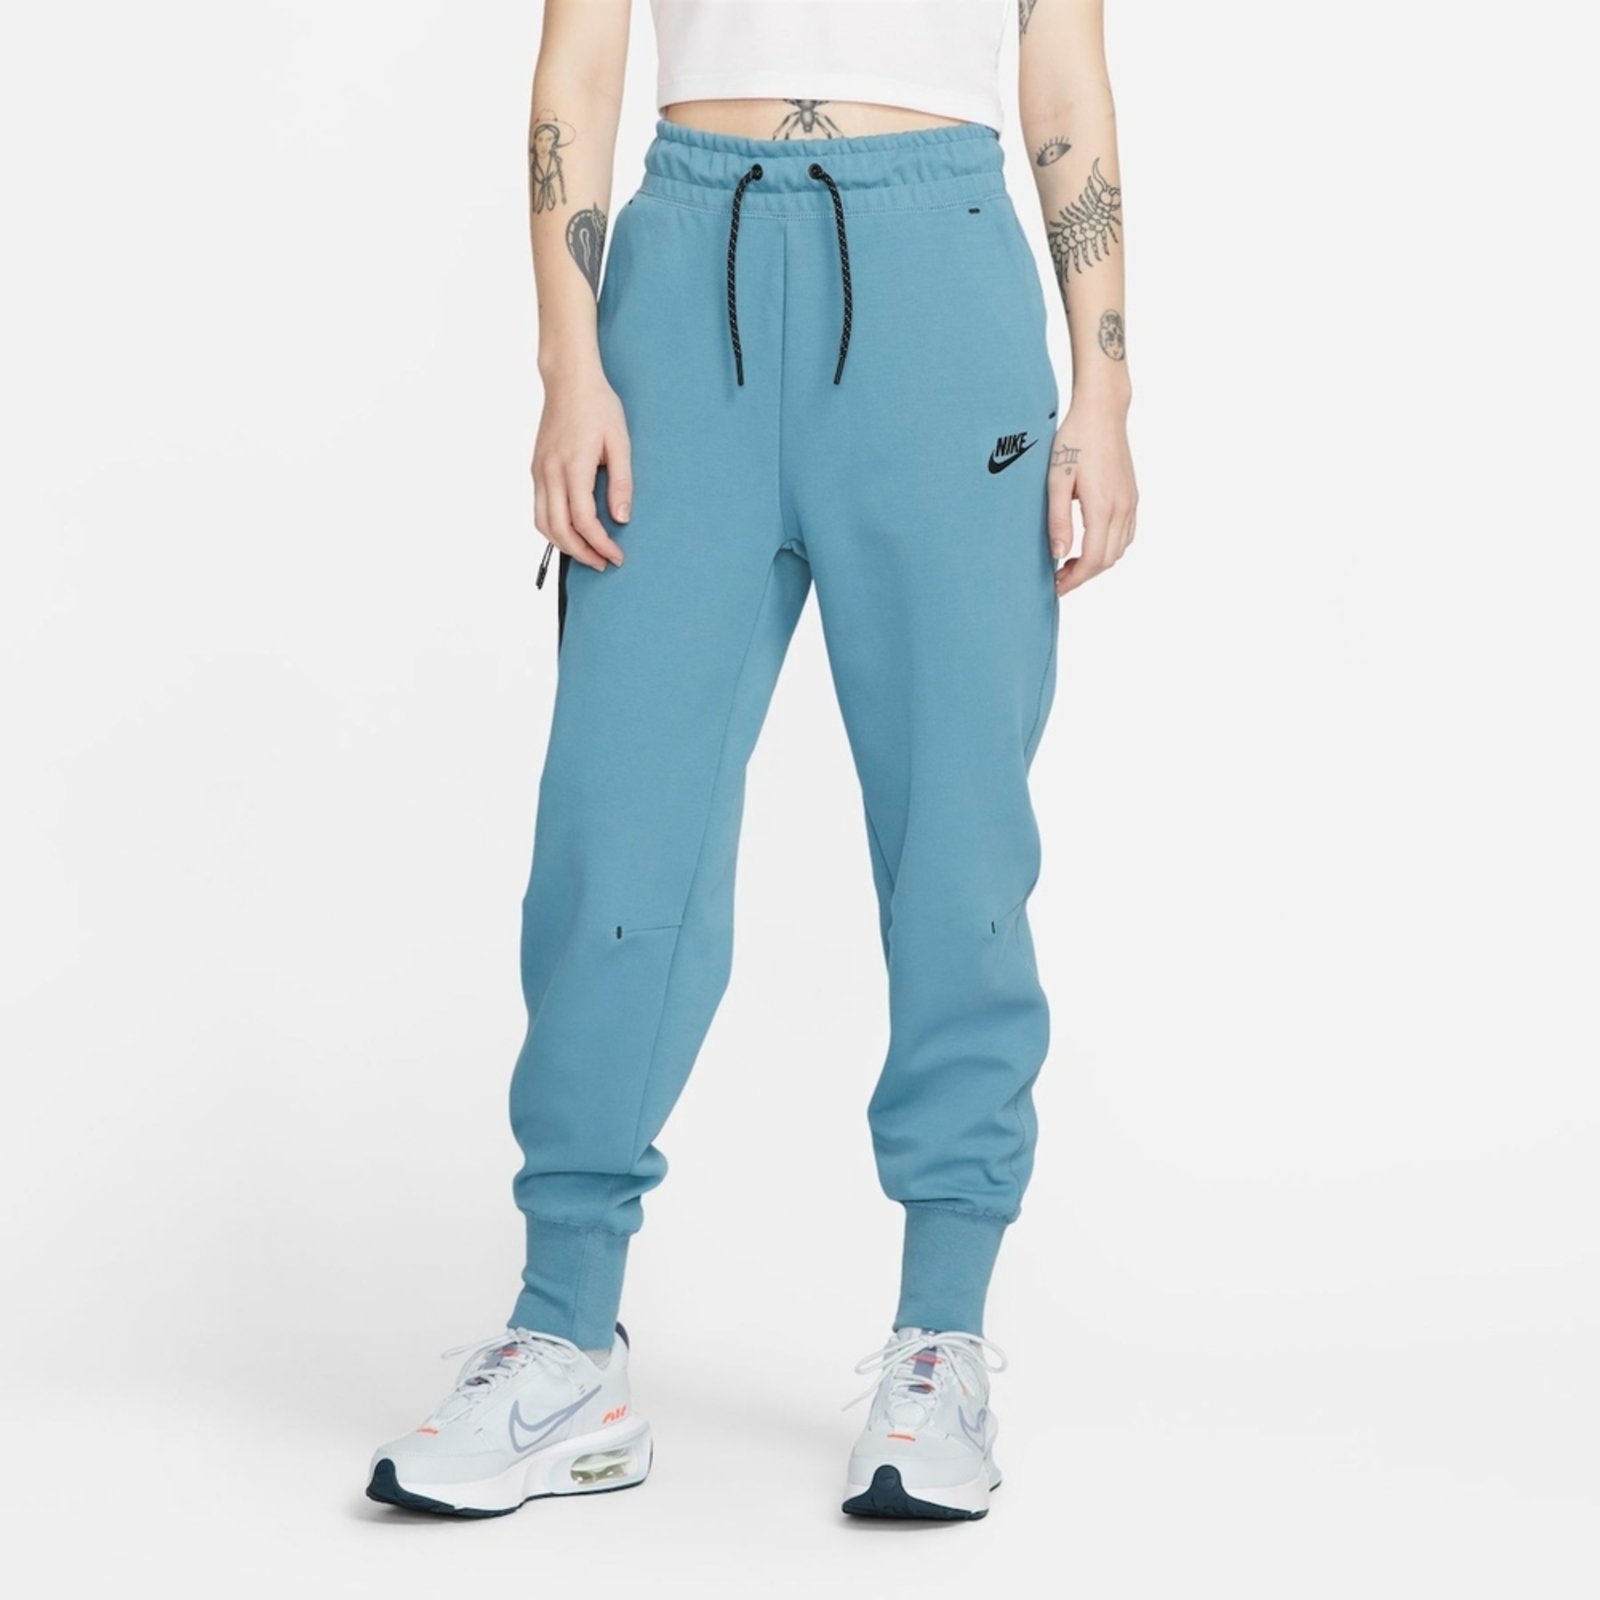 Calça Nike Sportswear Tech Fleece Feminina - Compre Agora